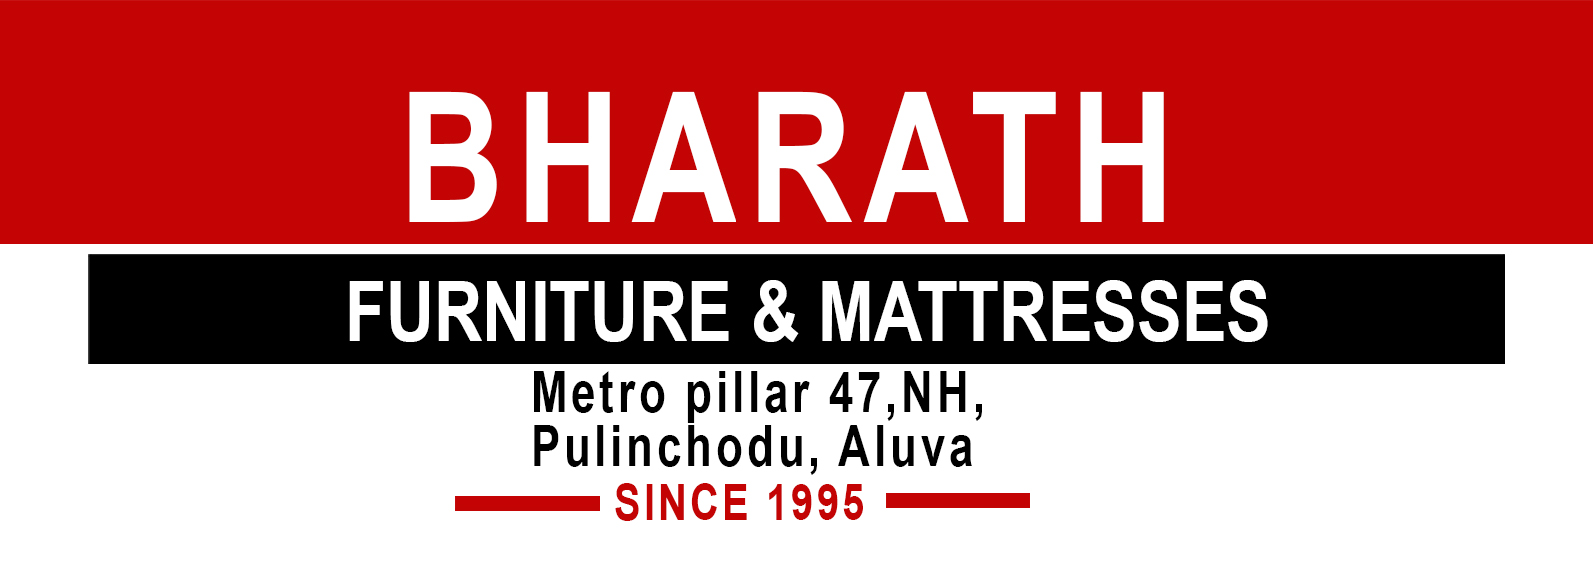 Bharath Furniture